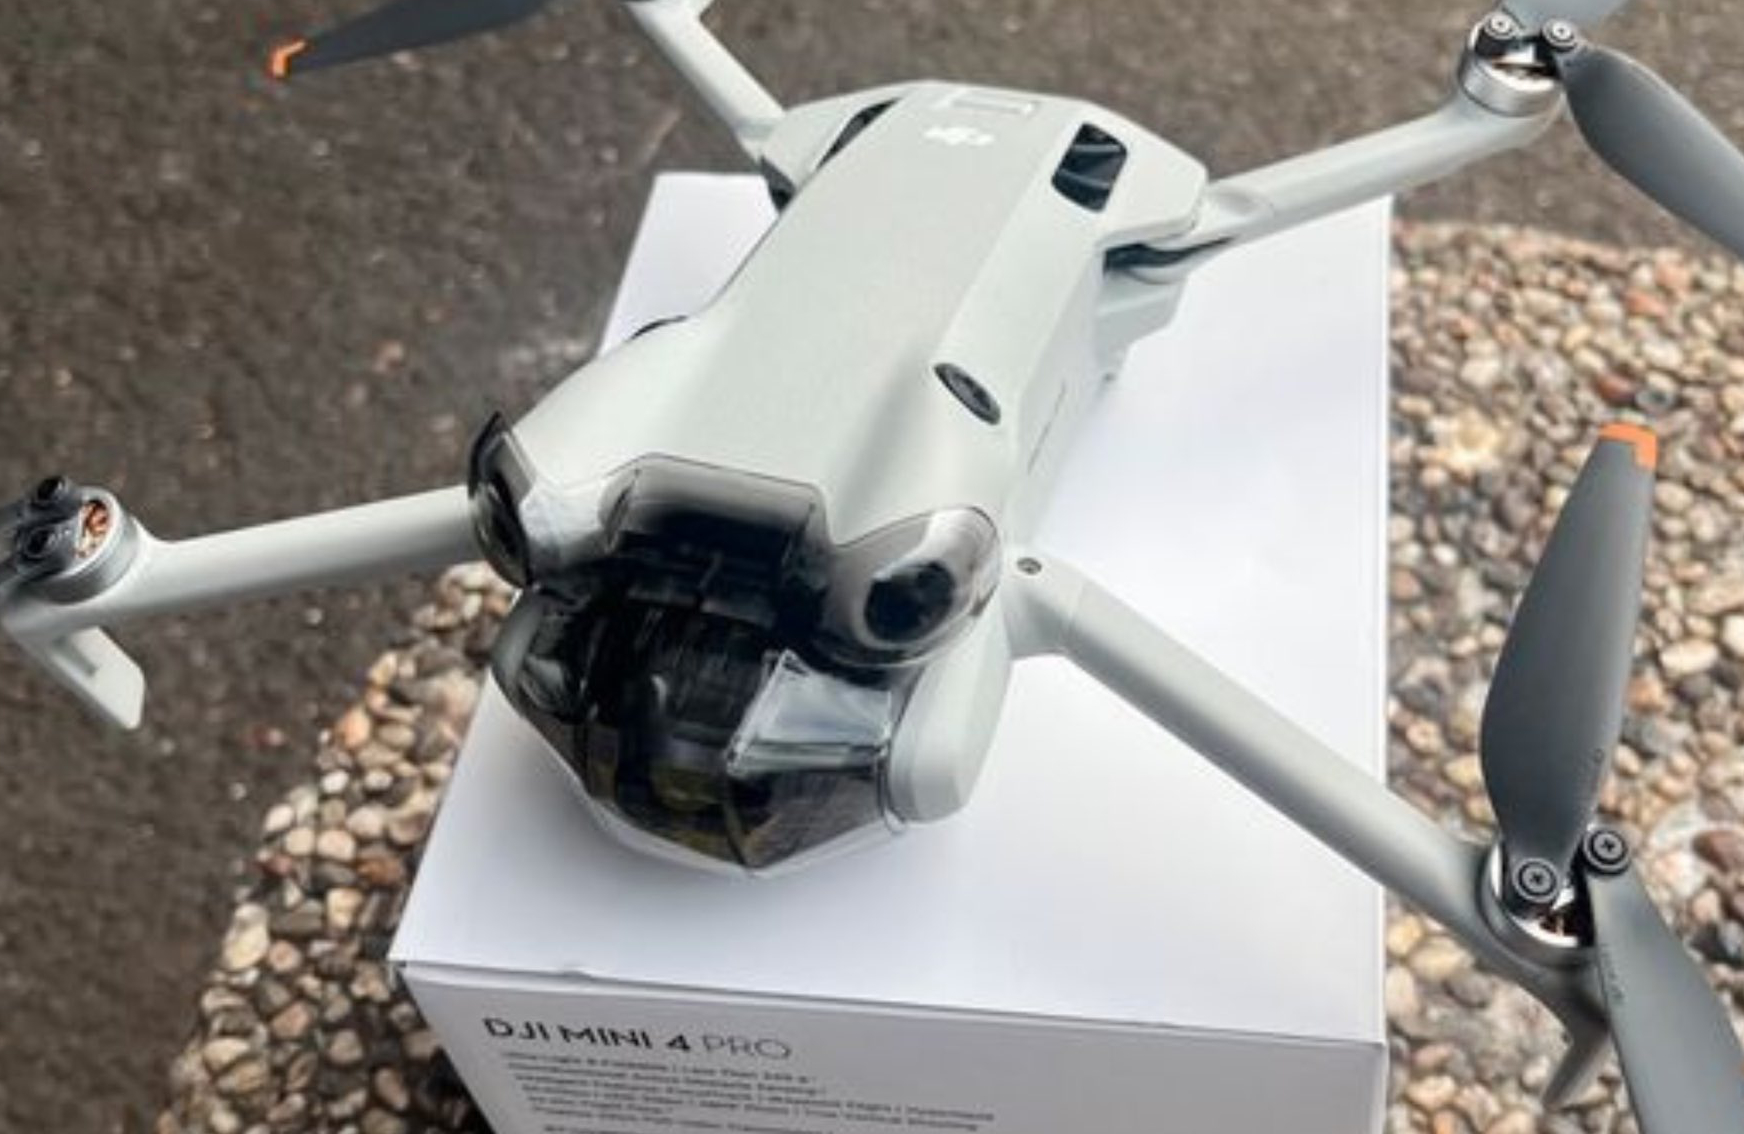 DJI Mini 4 Pro: new images of the futuristic 249g drone with DJI RC 2 remote control